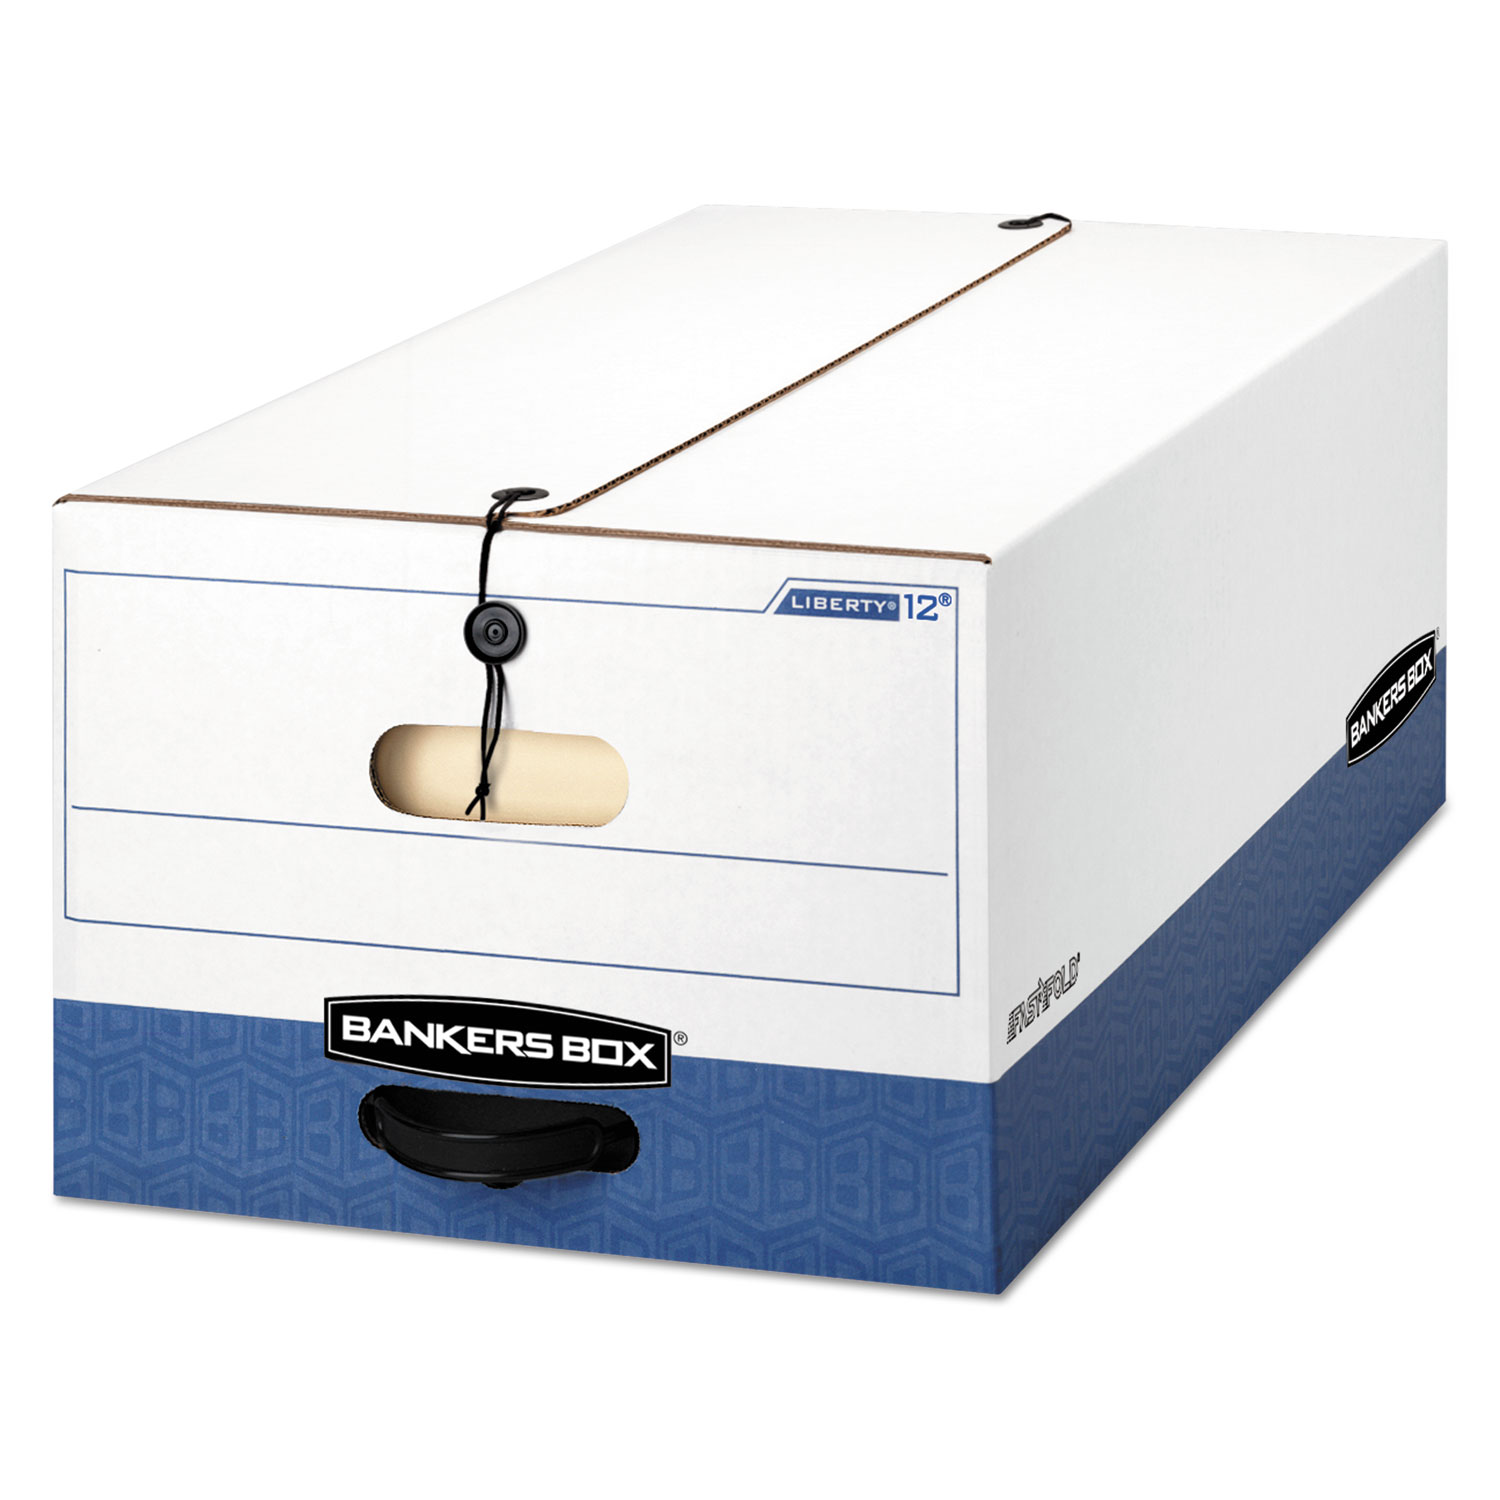  Bankers Box 00012 LIBERTY Heavy-Duty Strength Storage Boxes, Legal Files, 15.25 x 24.13 x 10.75, White/Blue, 12/Carton (FEL00012) 